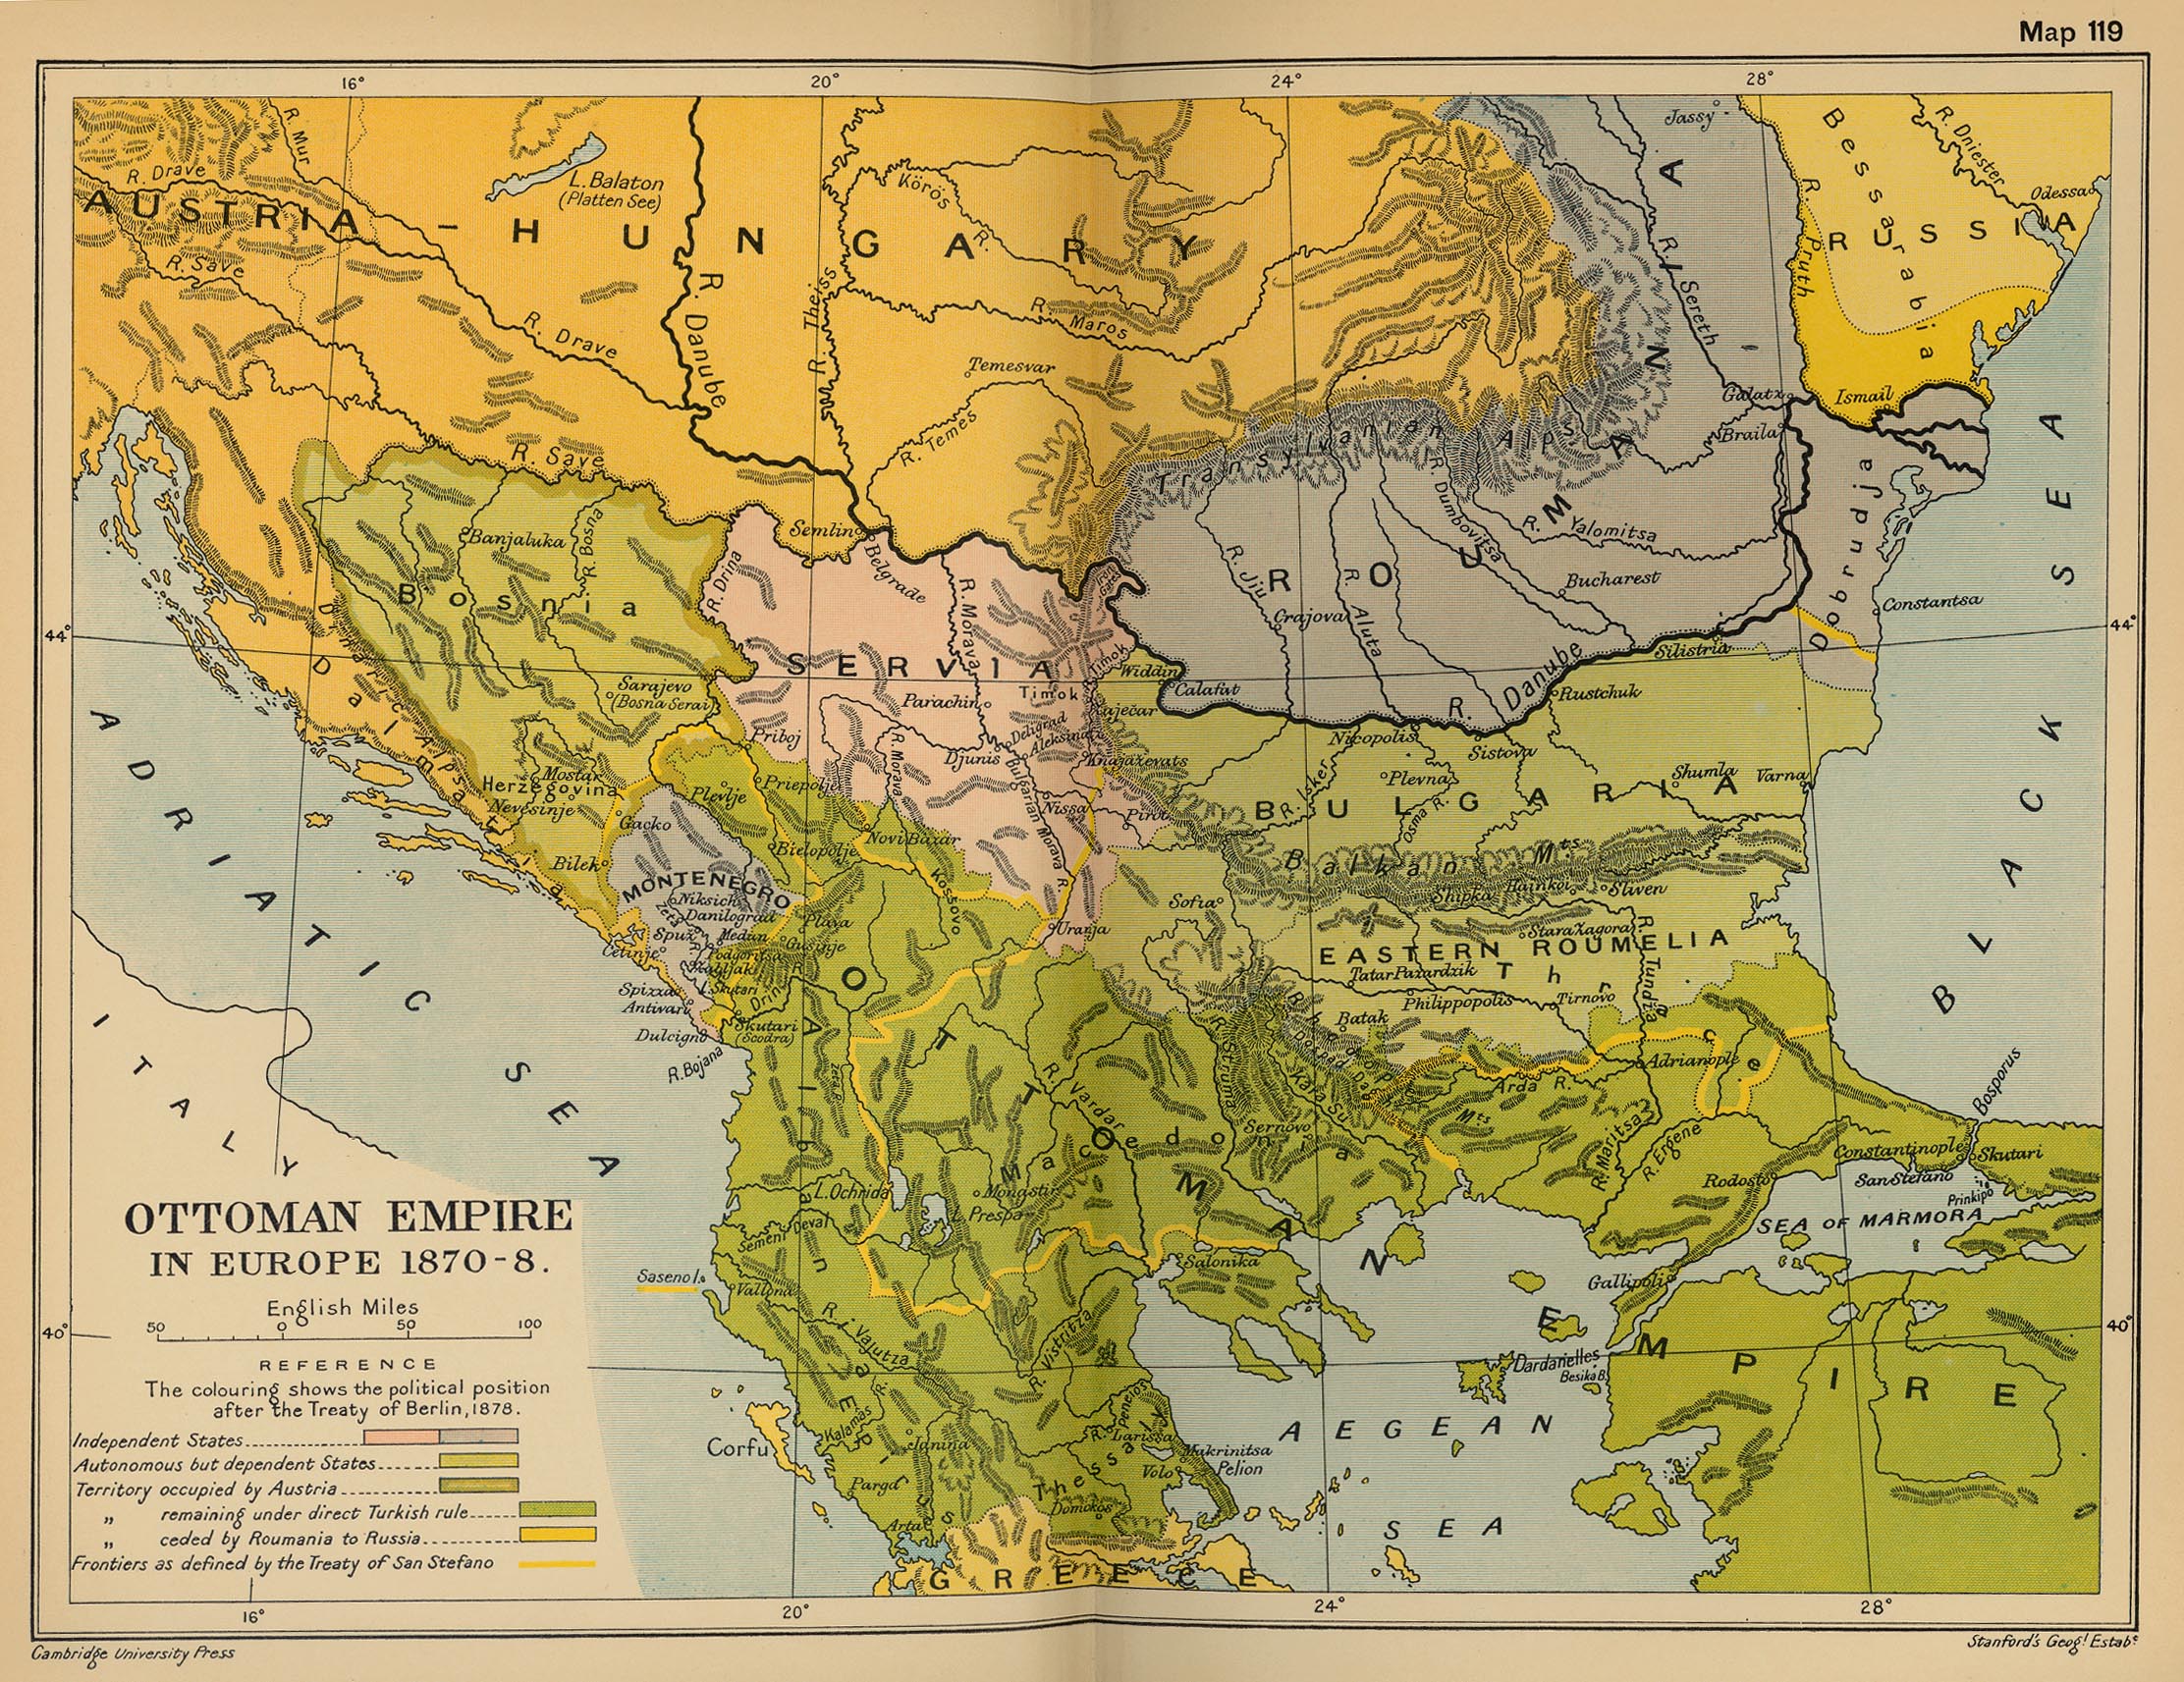 ottoman empire map 1500